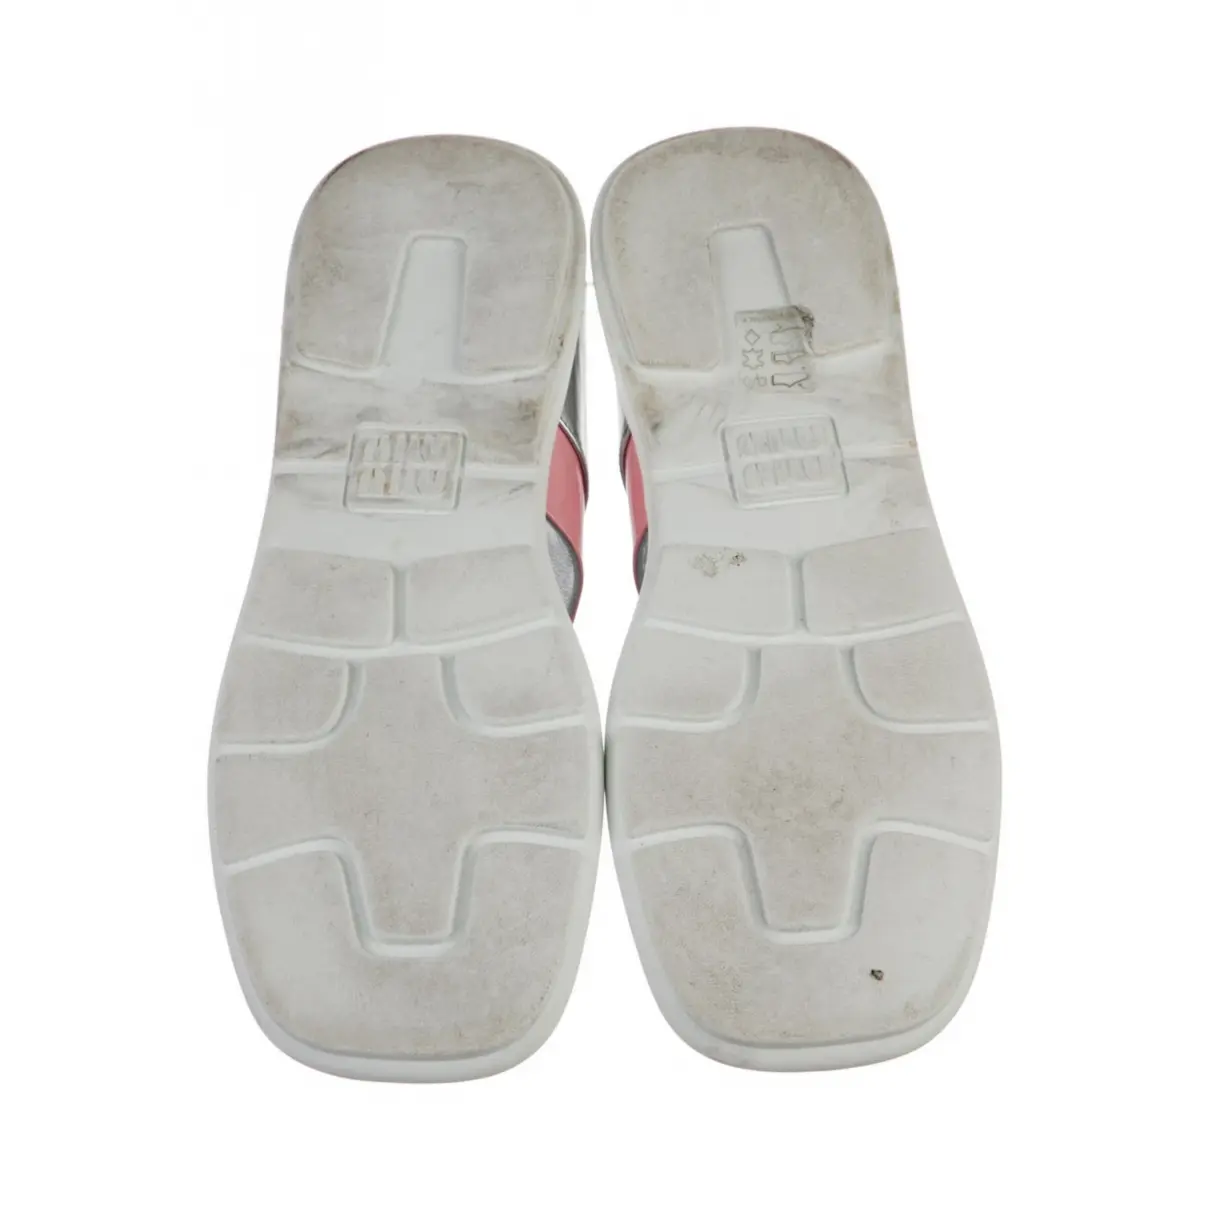 Patent leather sandal Miu Miu